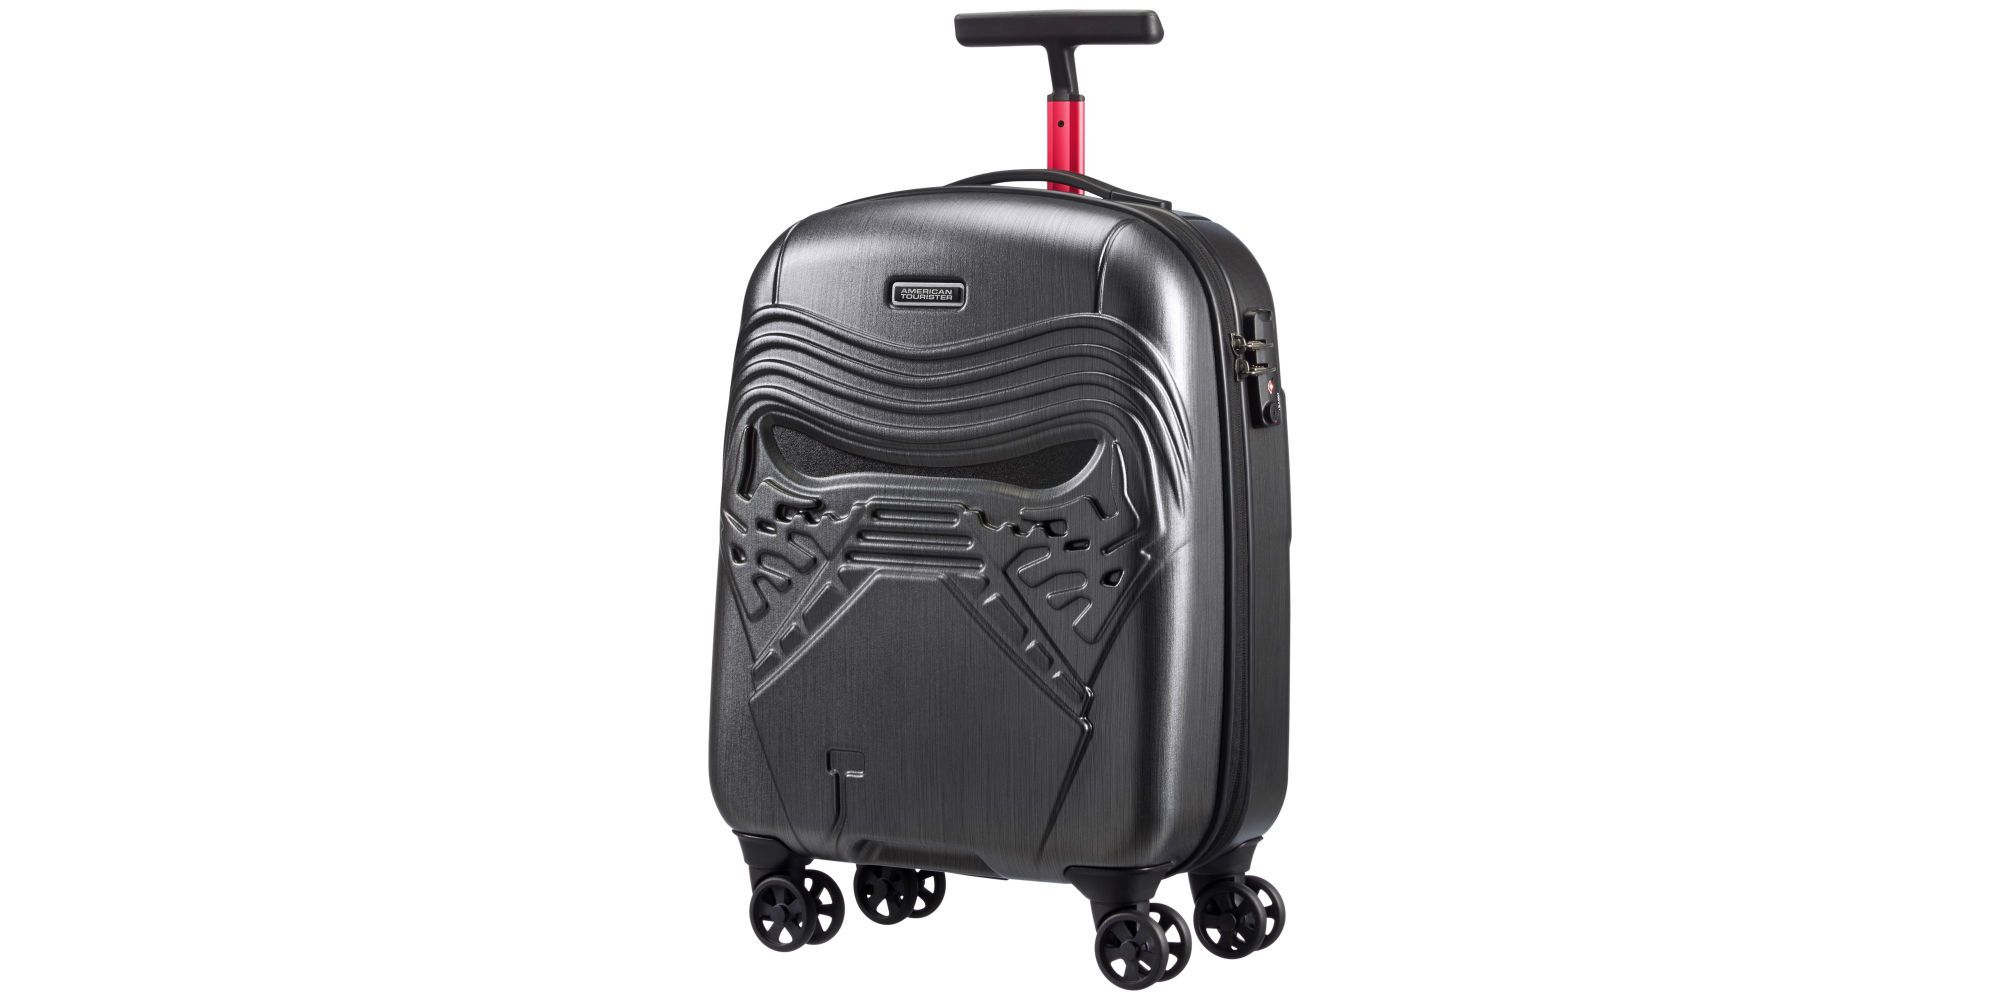 Kylo Ren suitcase